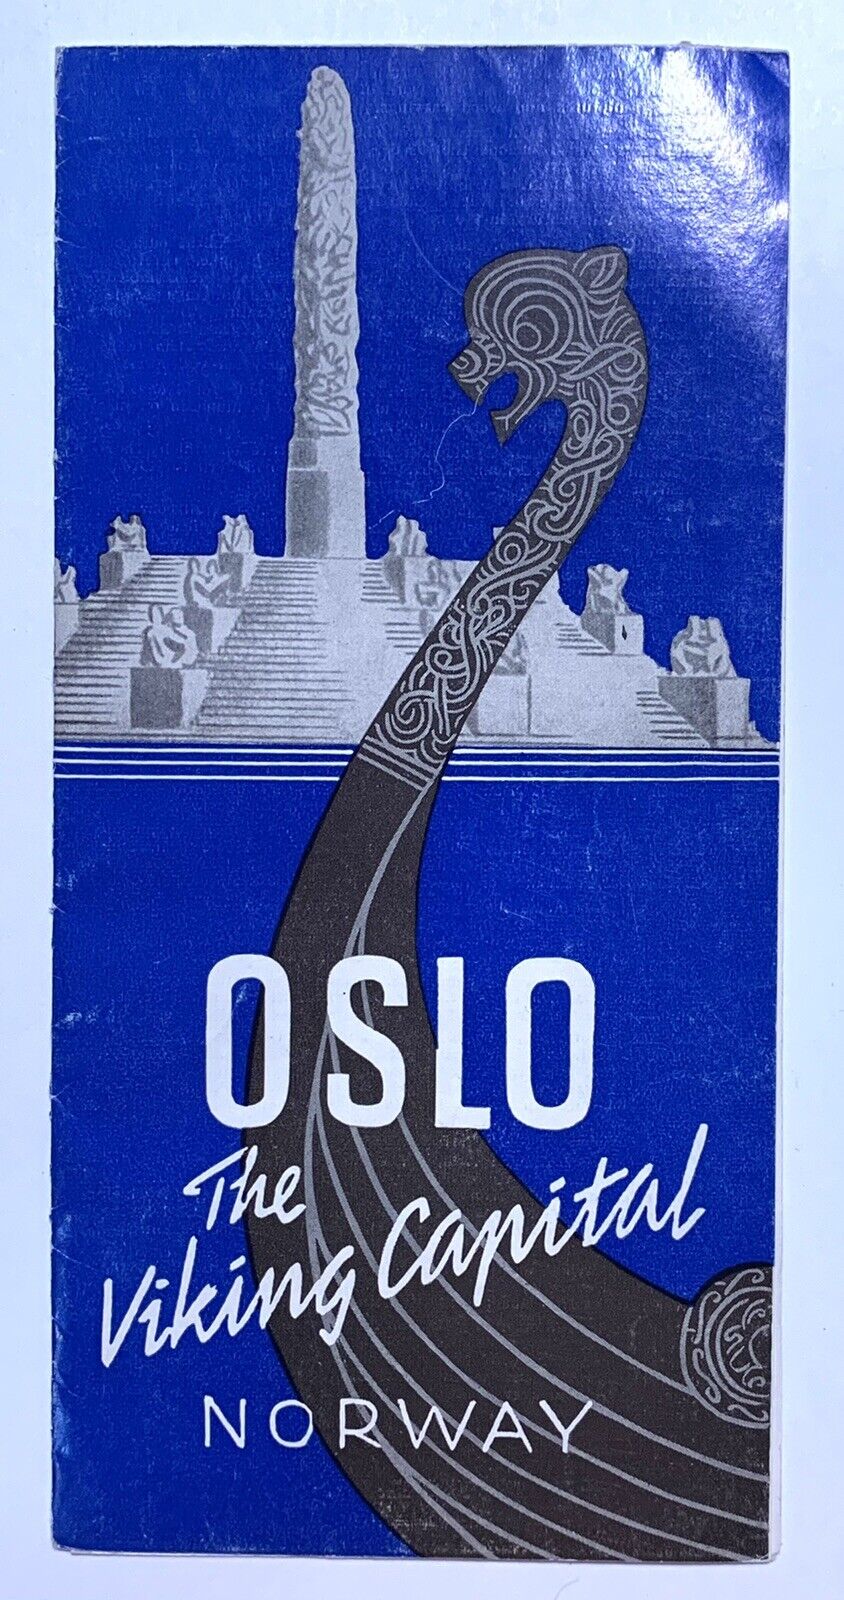 BROCHURE: 1965 NORWEGIAN STATE RAILWAYS - Oslo The Viking Capital Norway